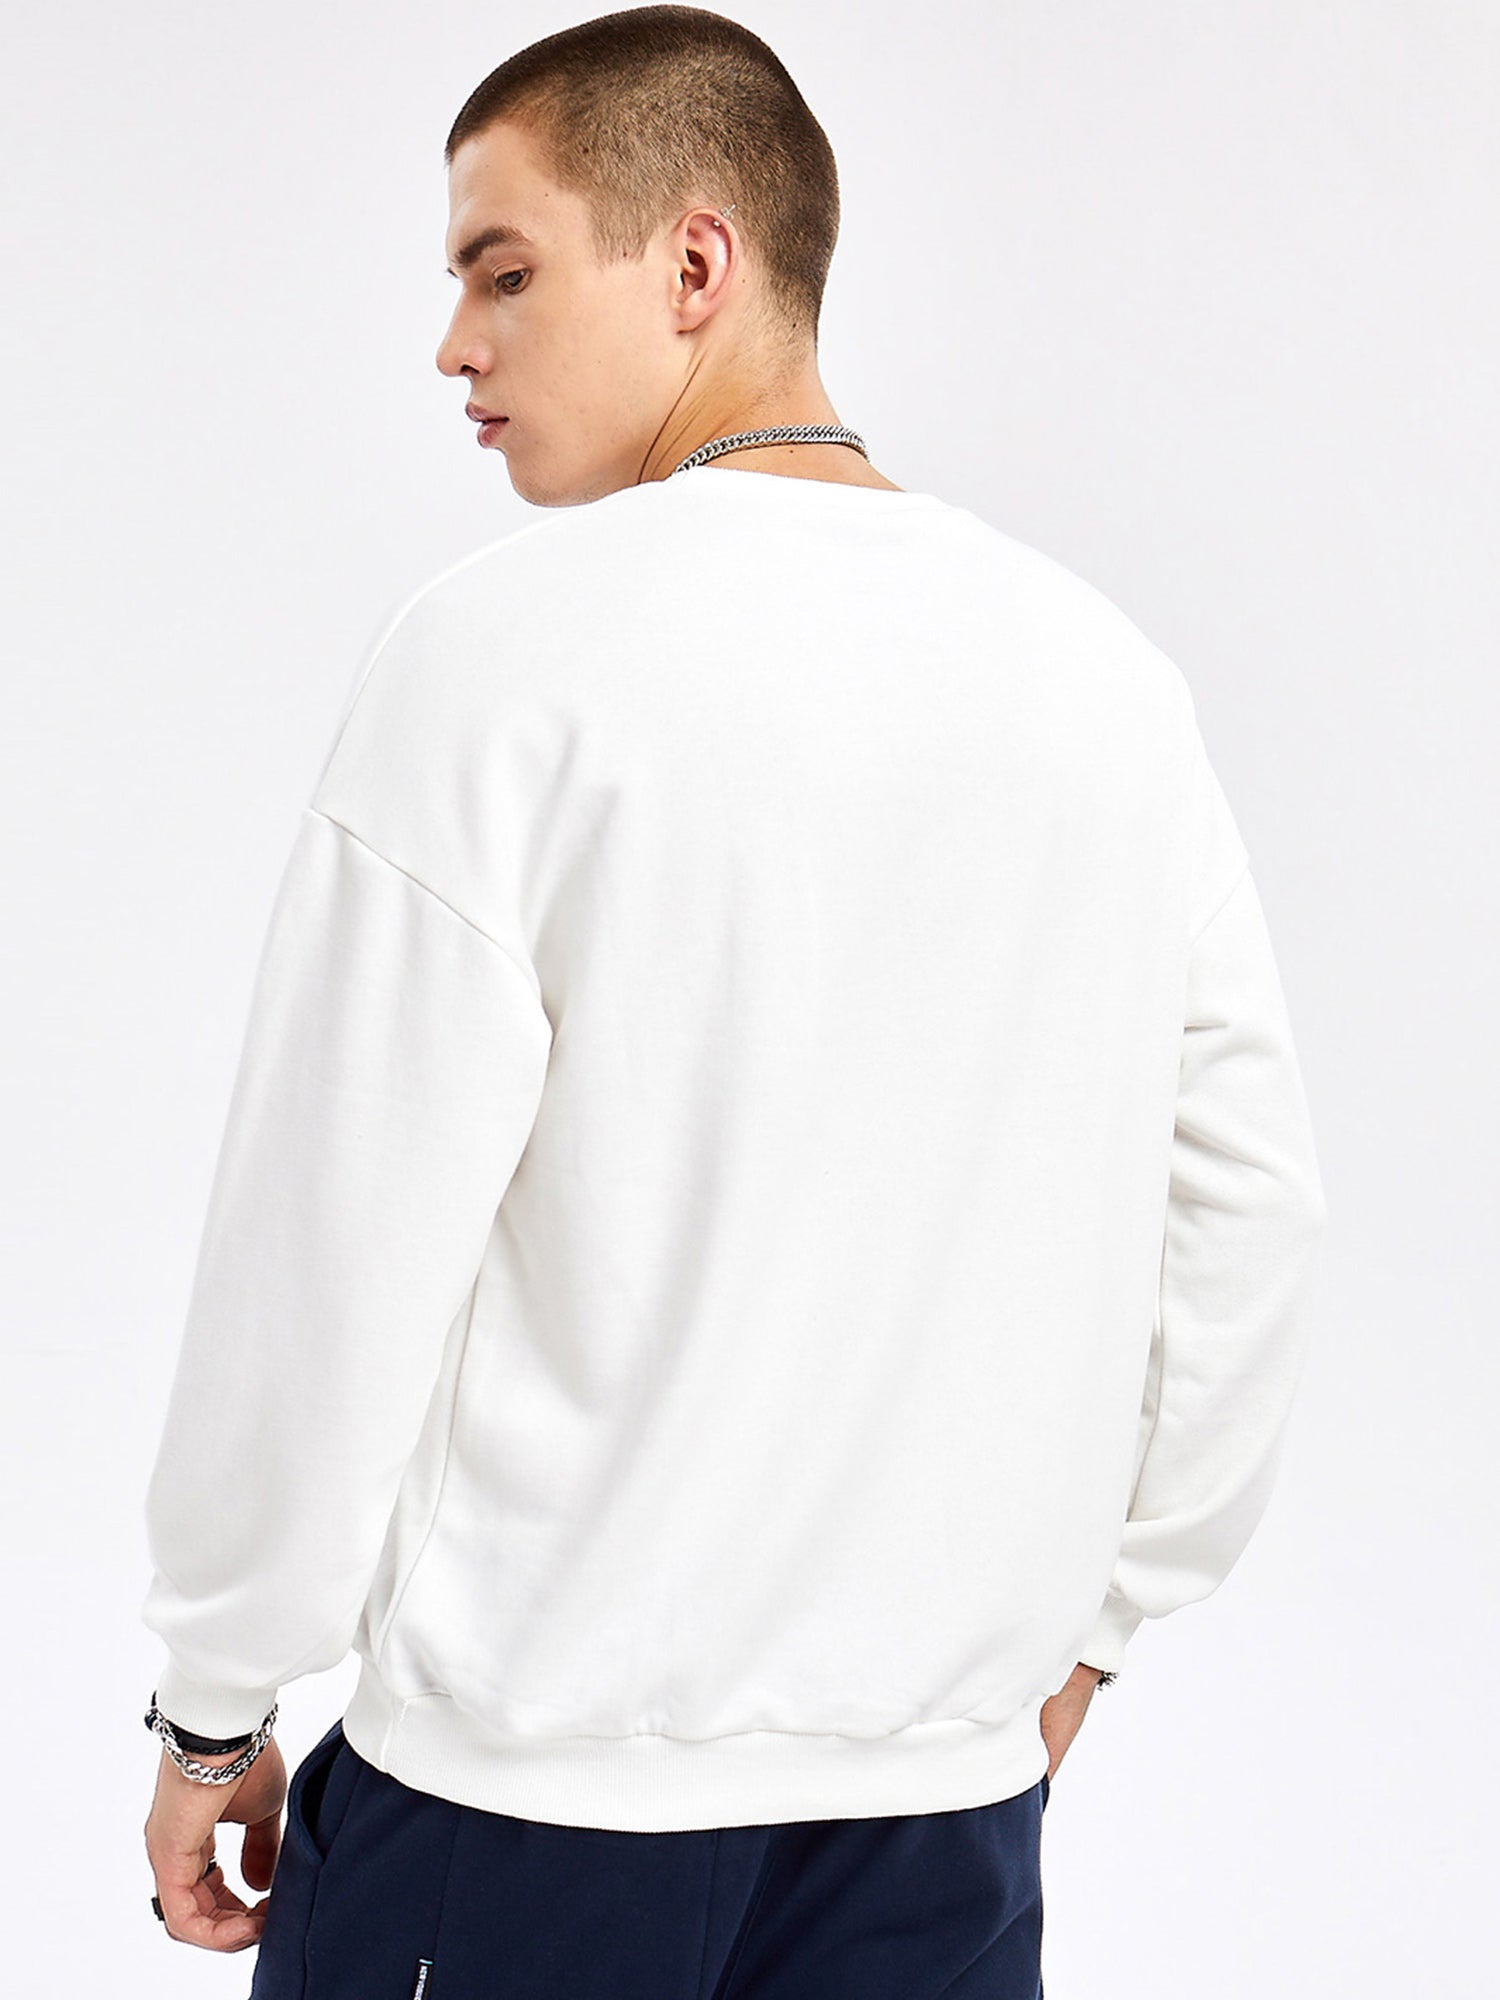 JUSTNOTAG Casual Letter Cotton Round-Neck White Sweatshirts